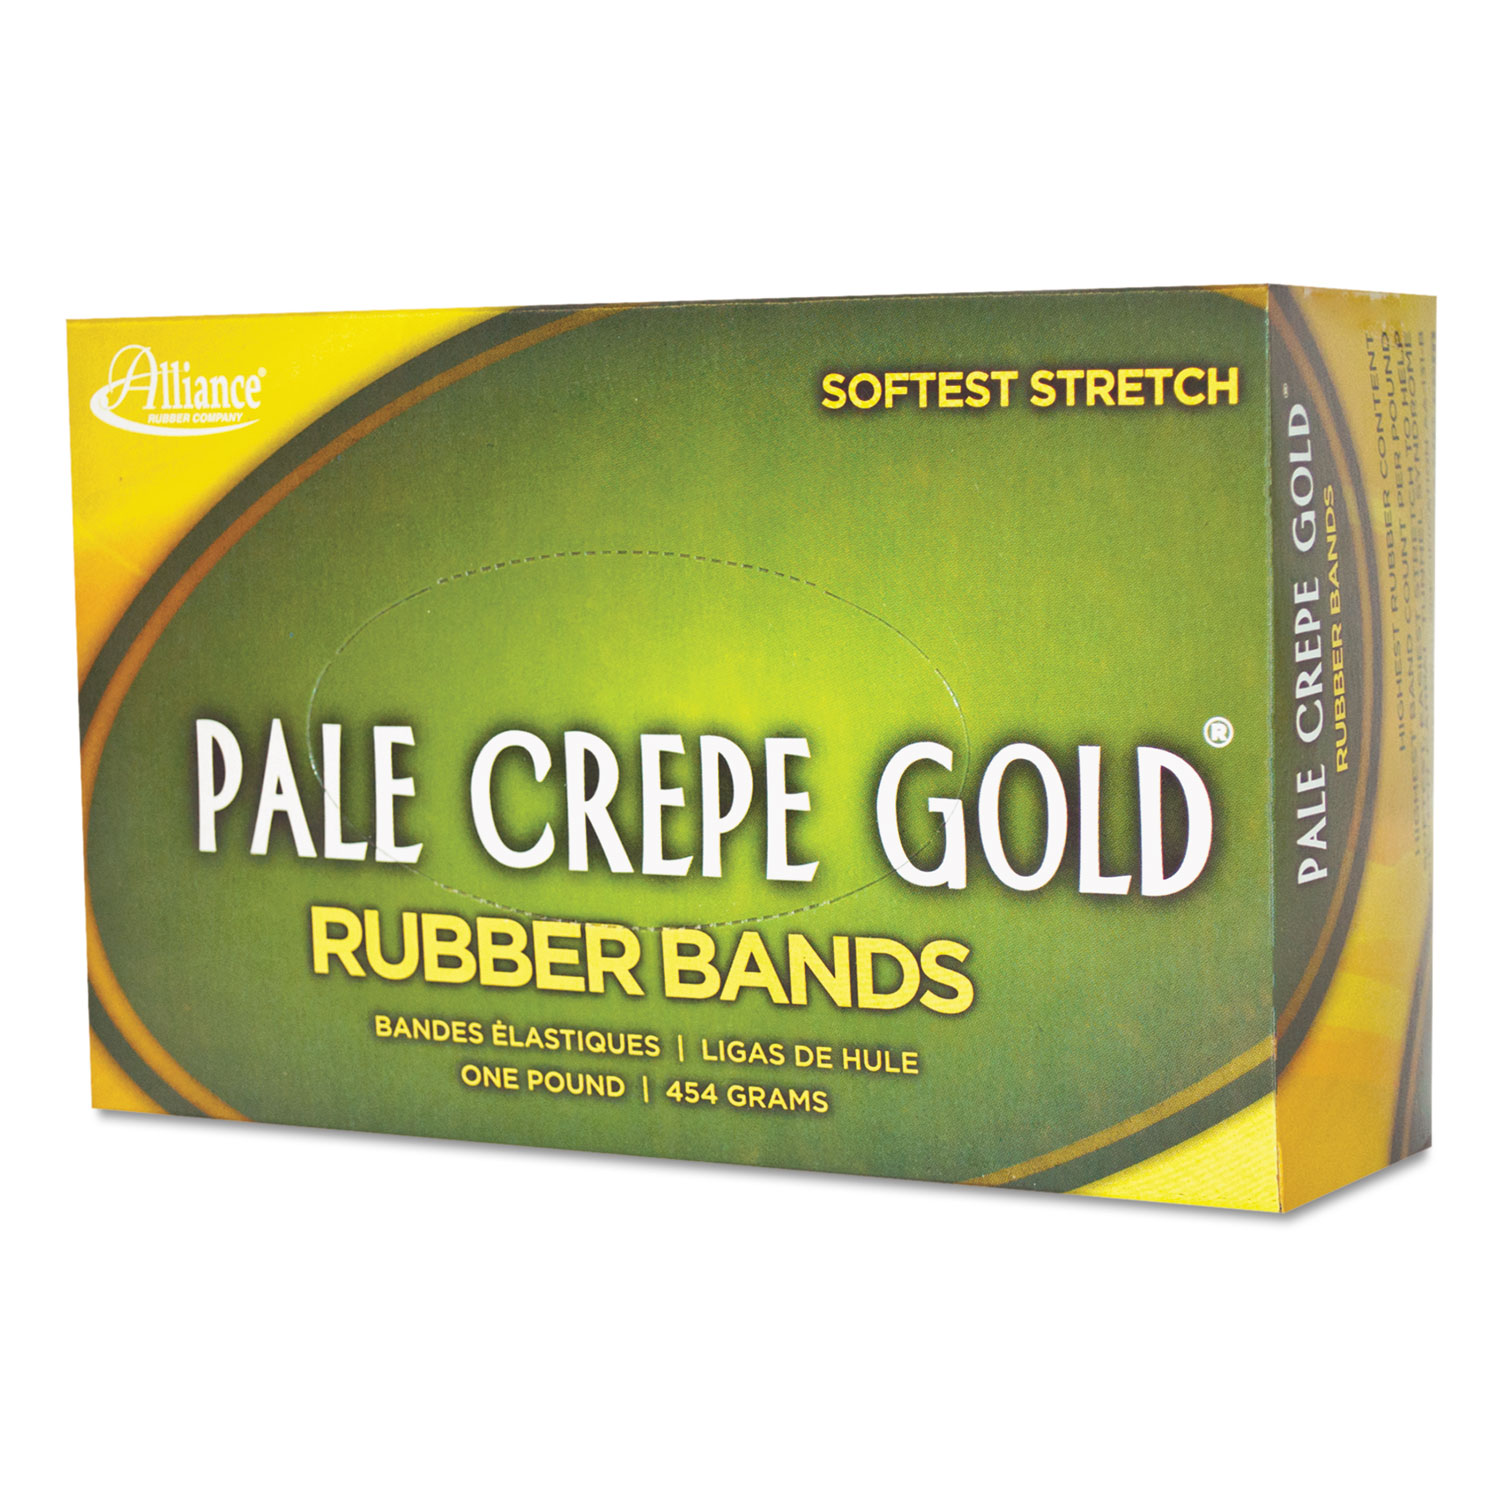 3-1/2 x 1/16 Size 19 ALL20195 Alliance Pale Crepe Gold Rubber Bands 1lb Box